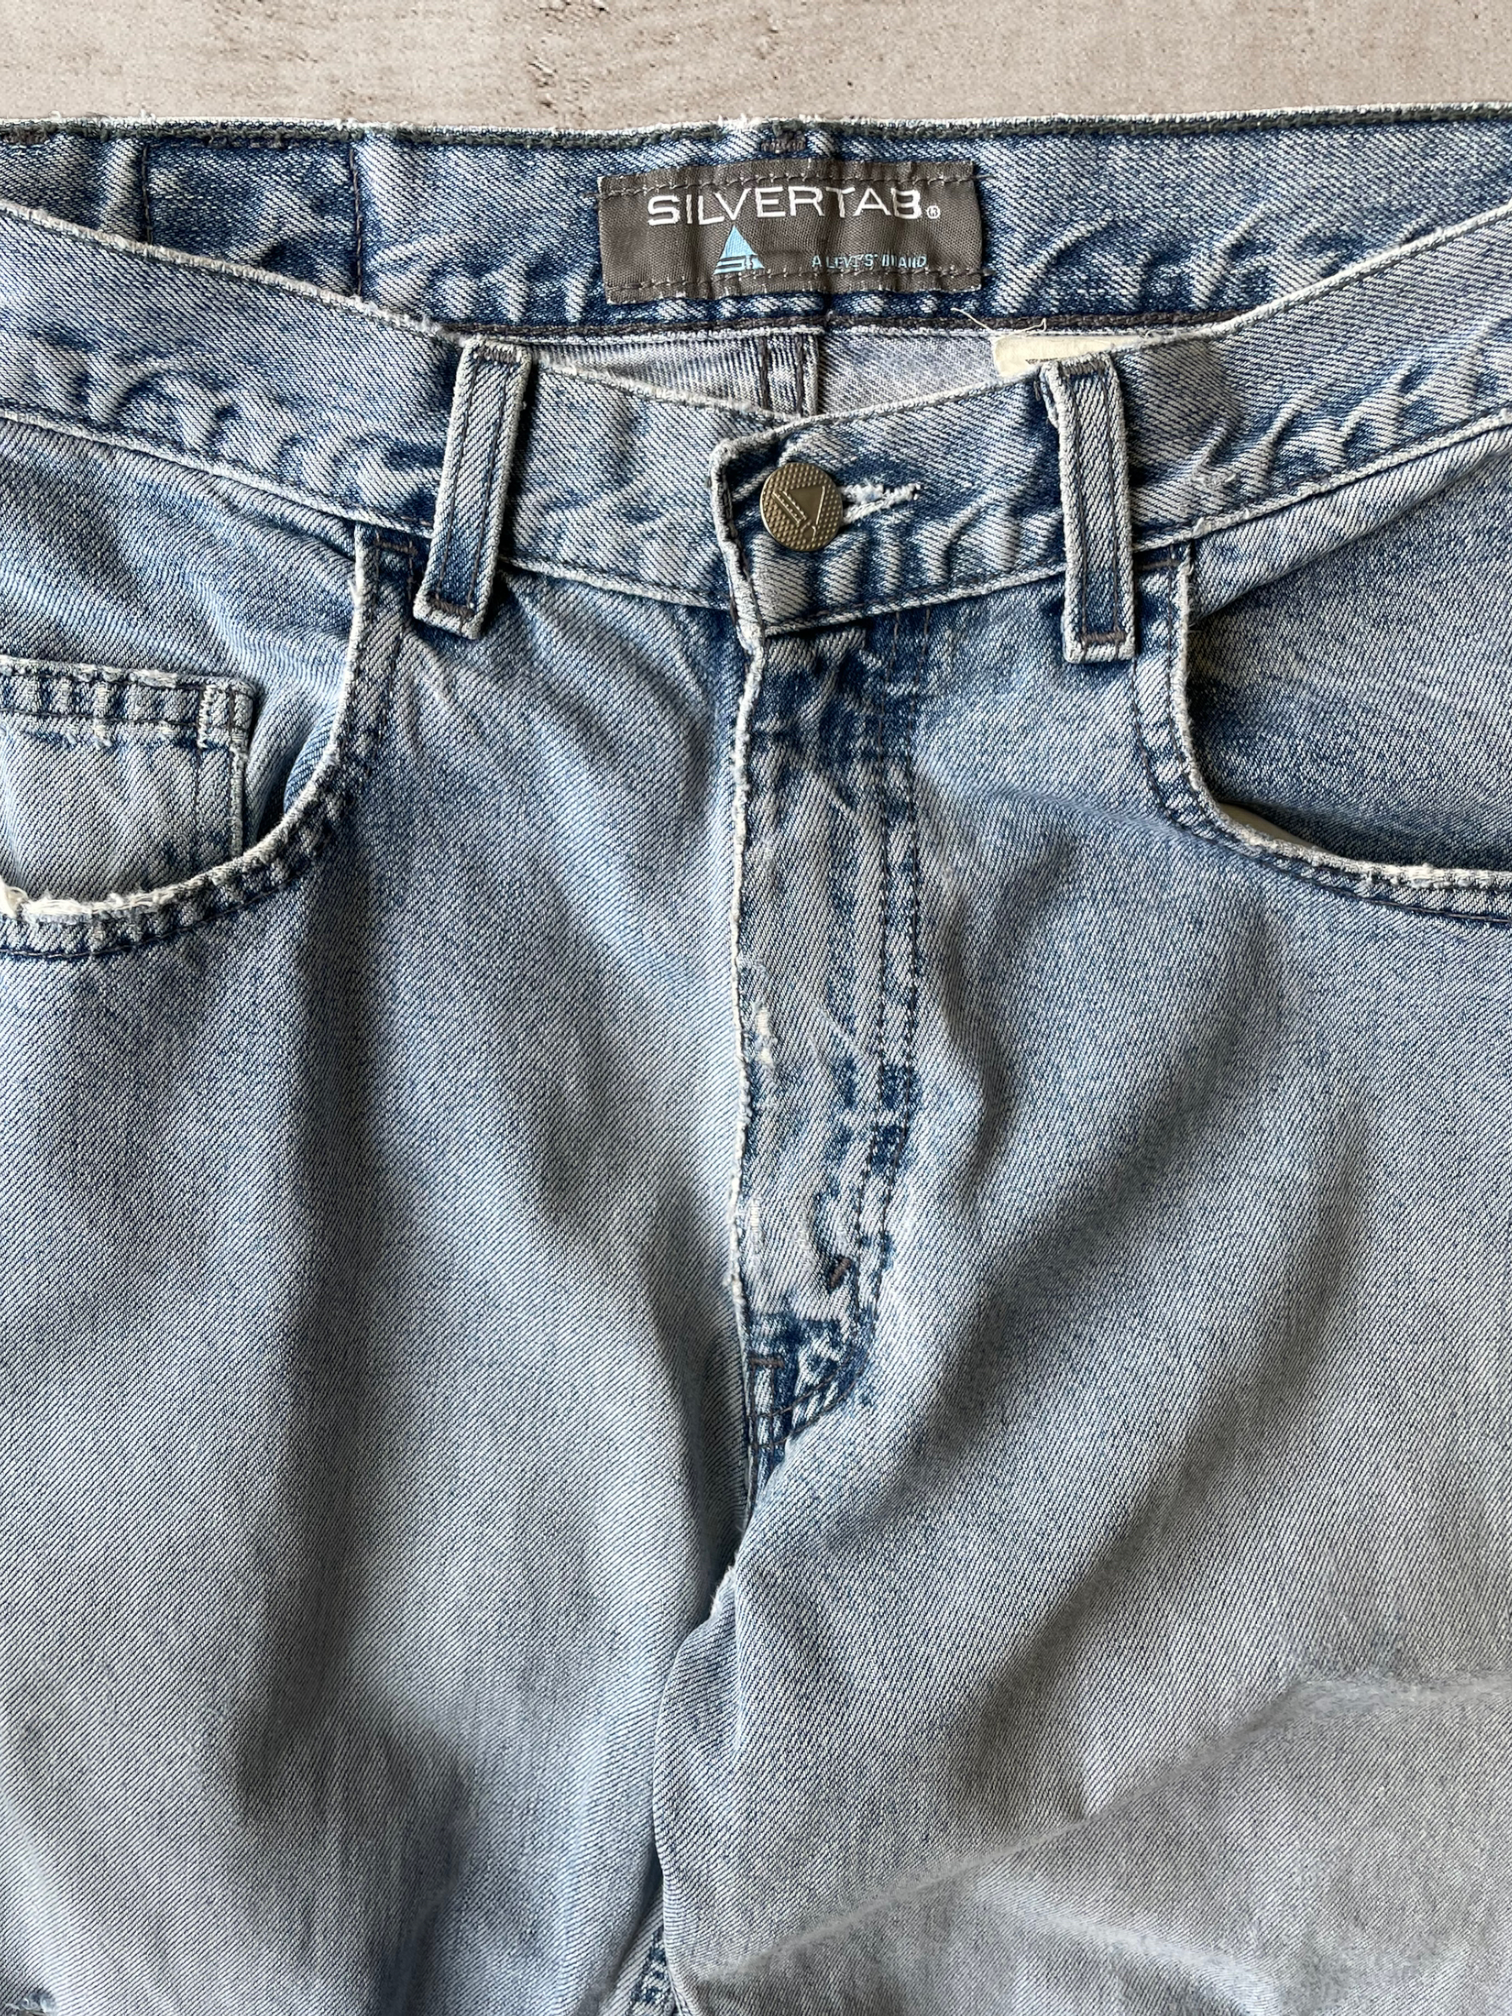 90s Levi Silvertab Loose Fit Jeans - 31x32